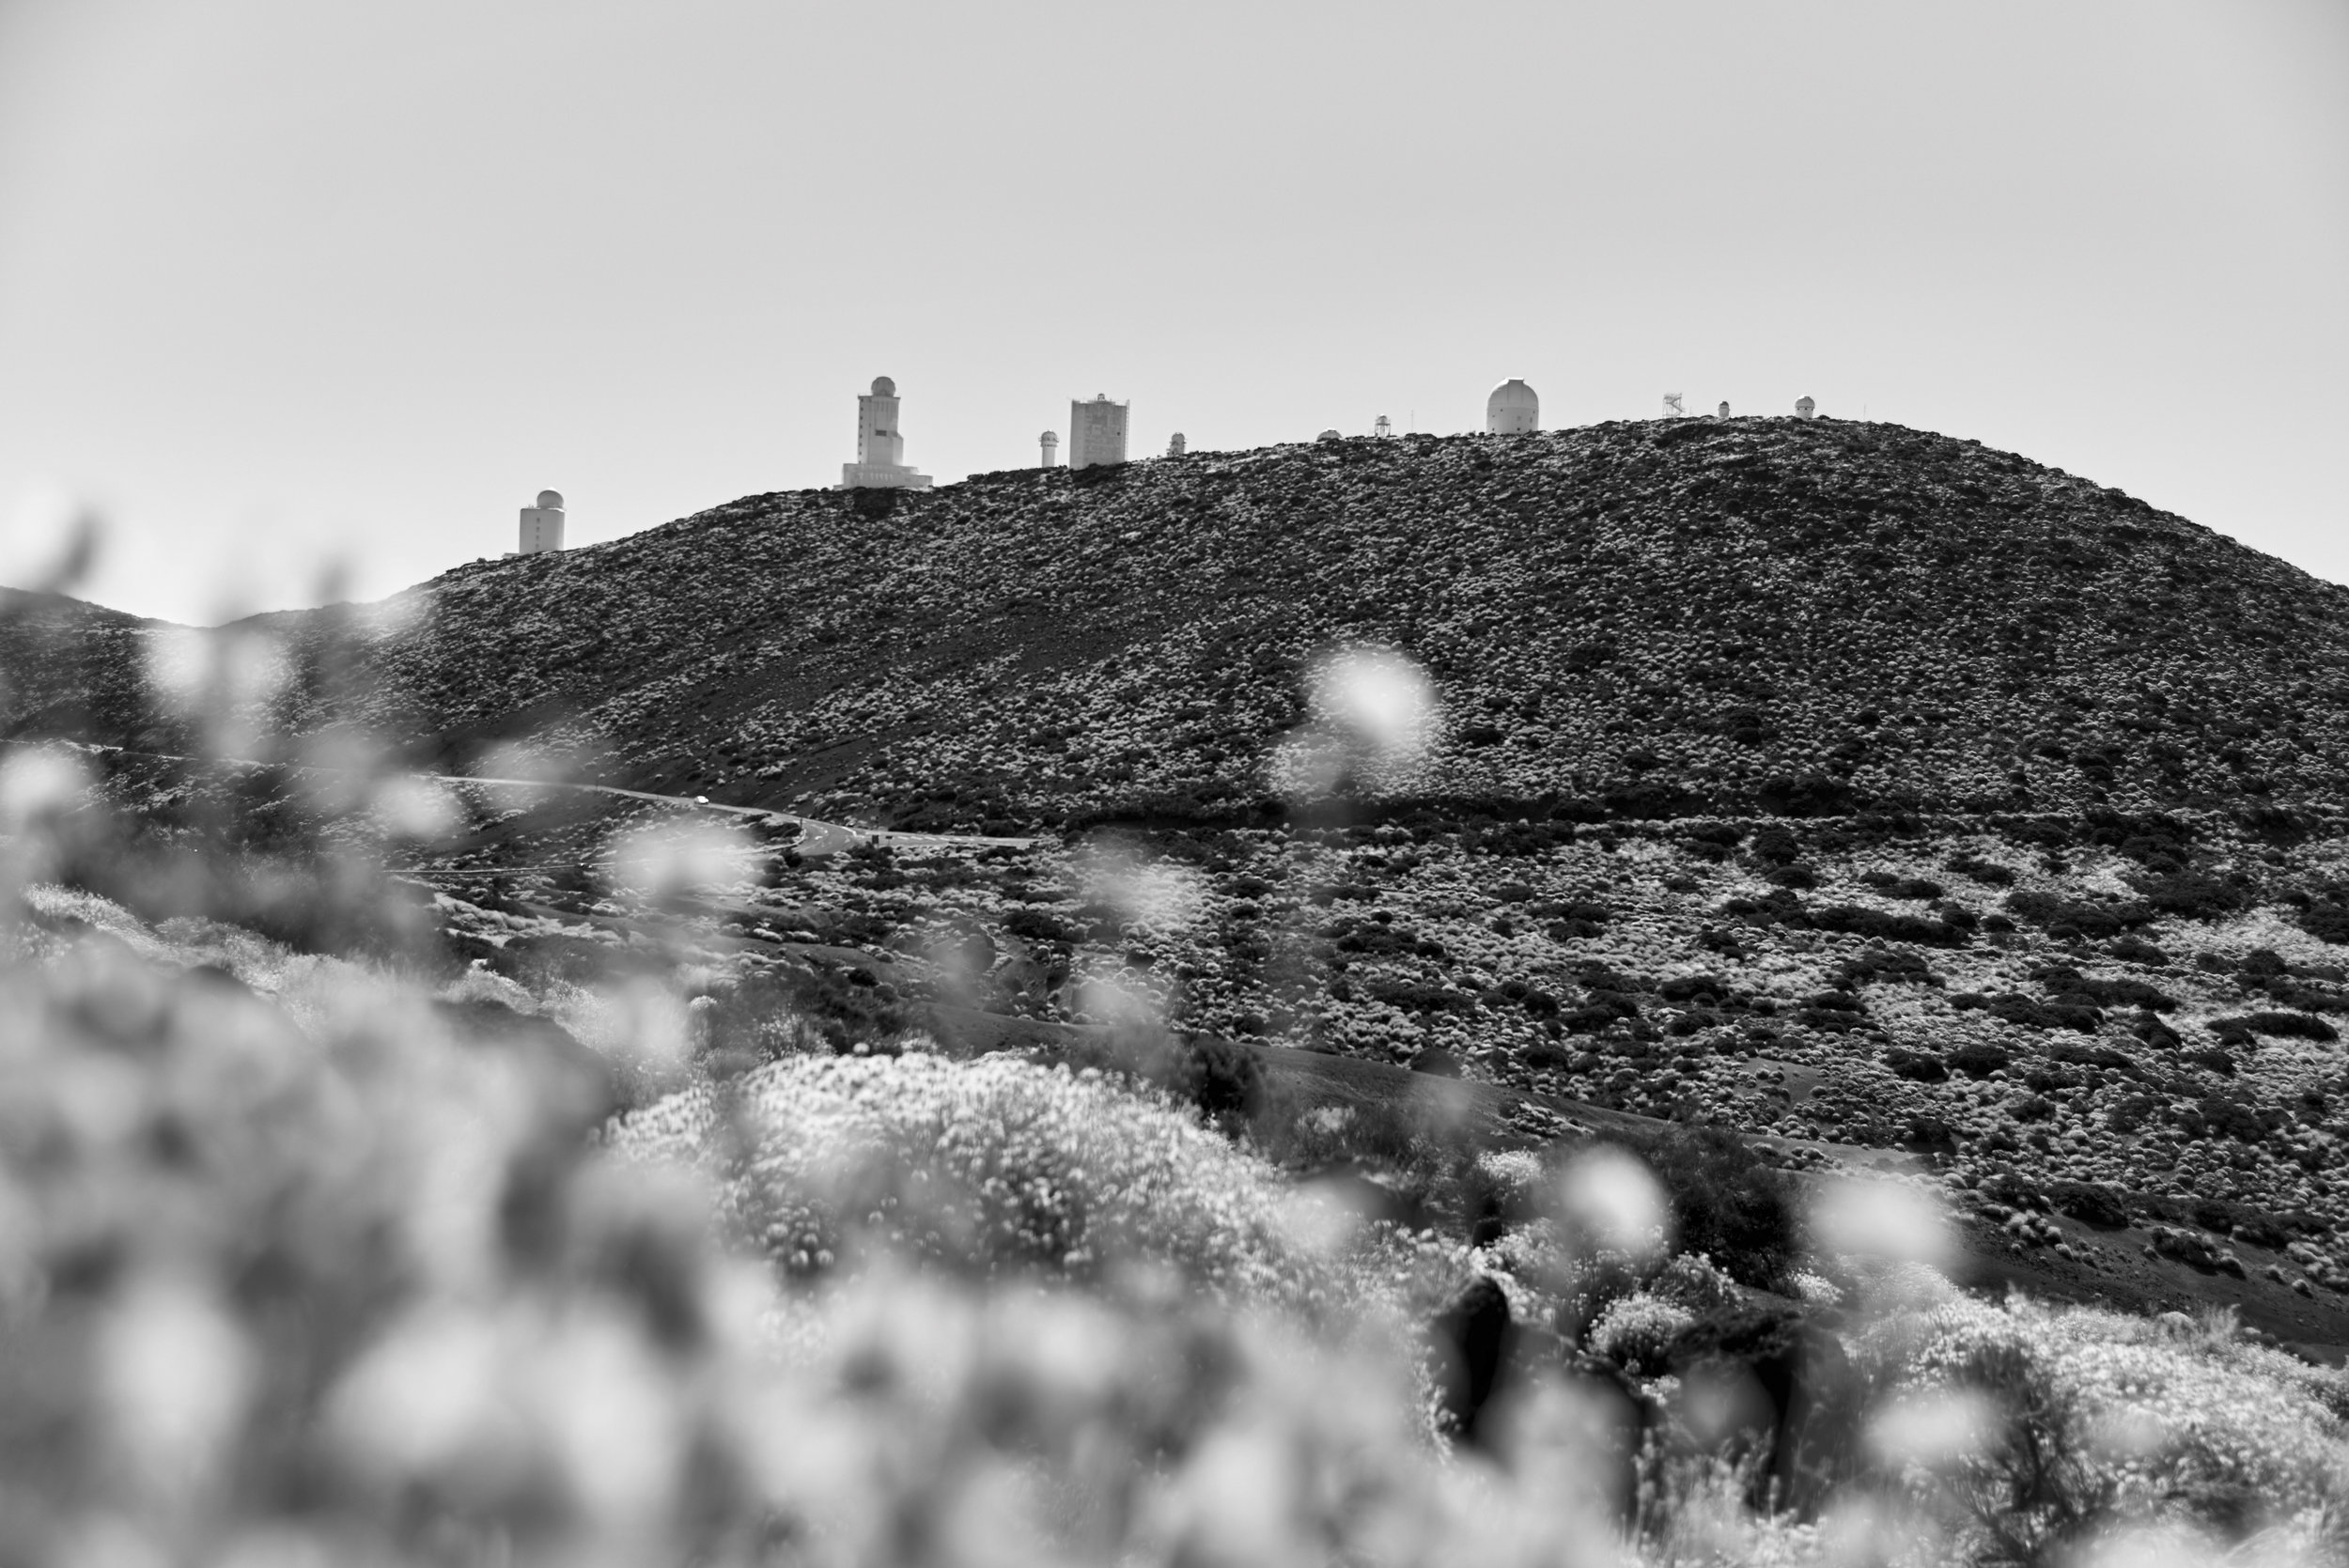 Untitled, Tenerife Observatory, 2016